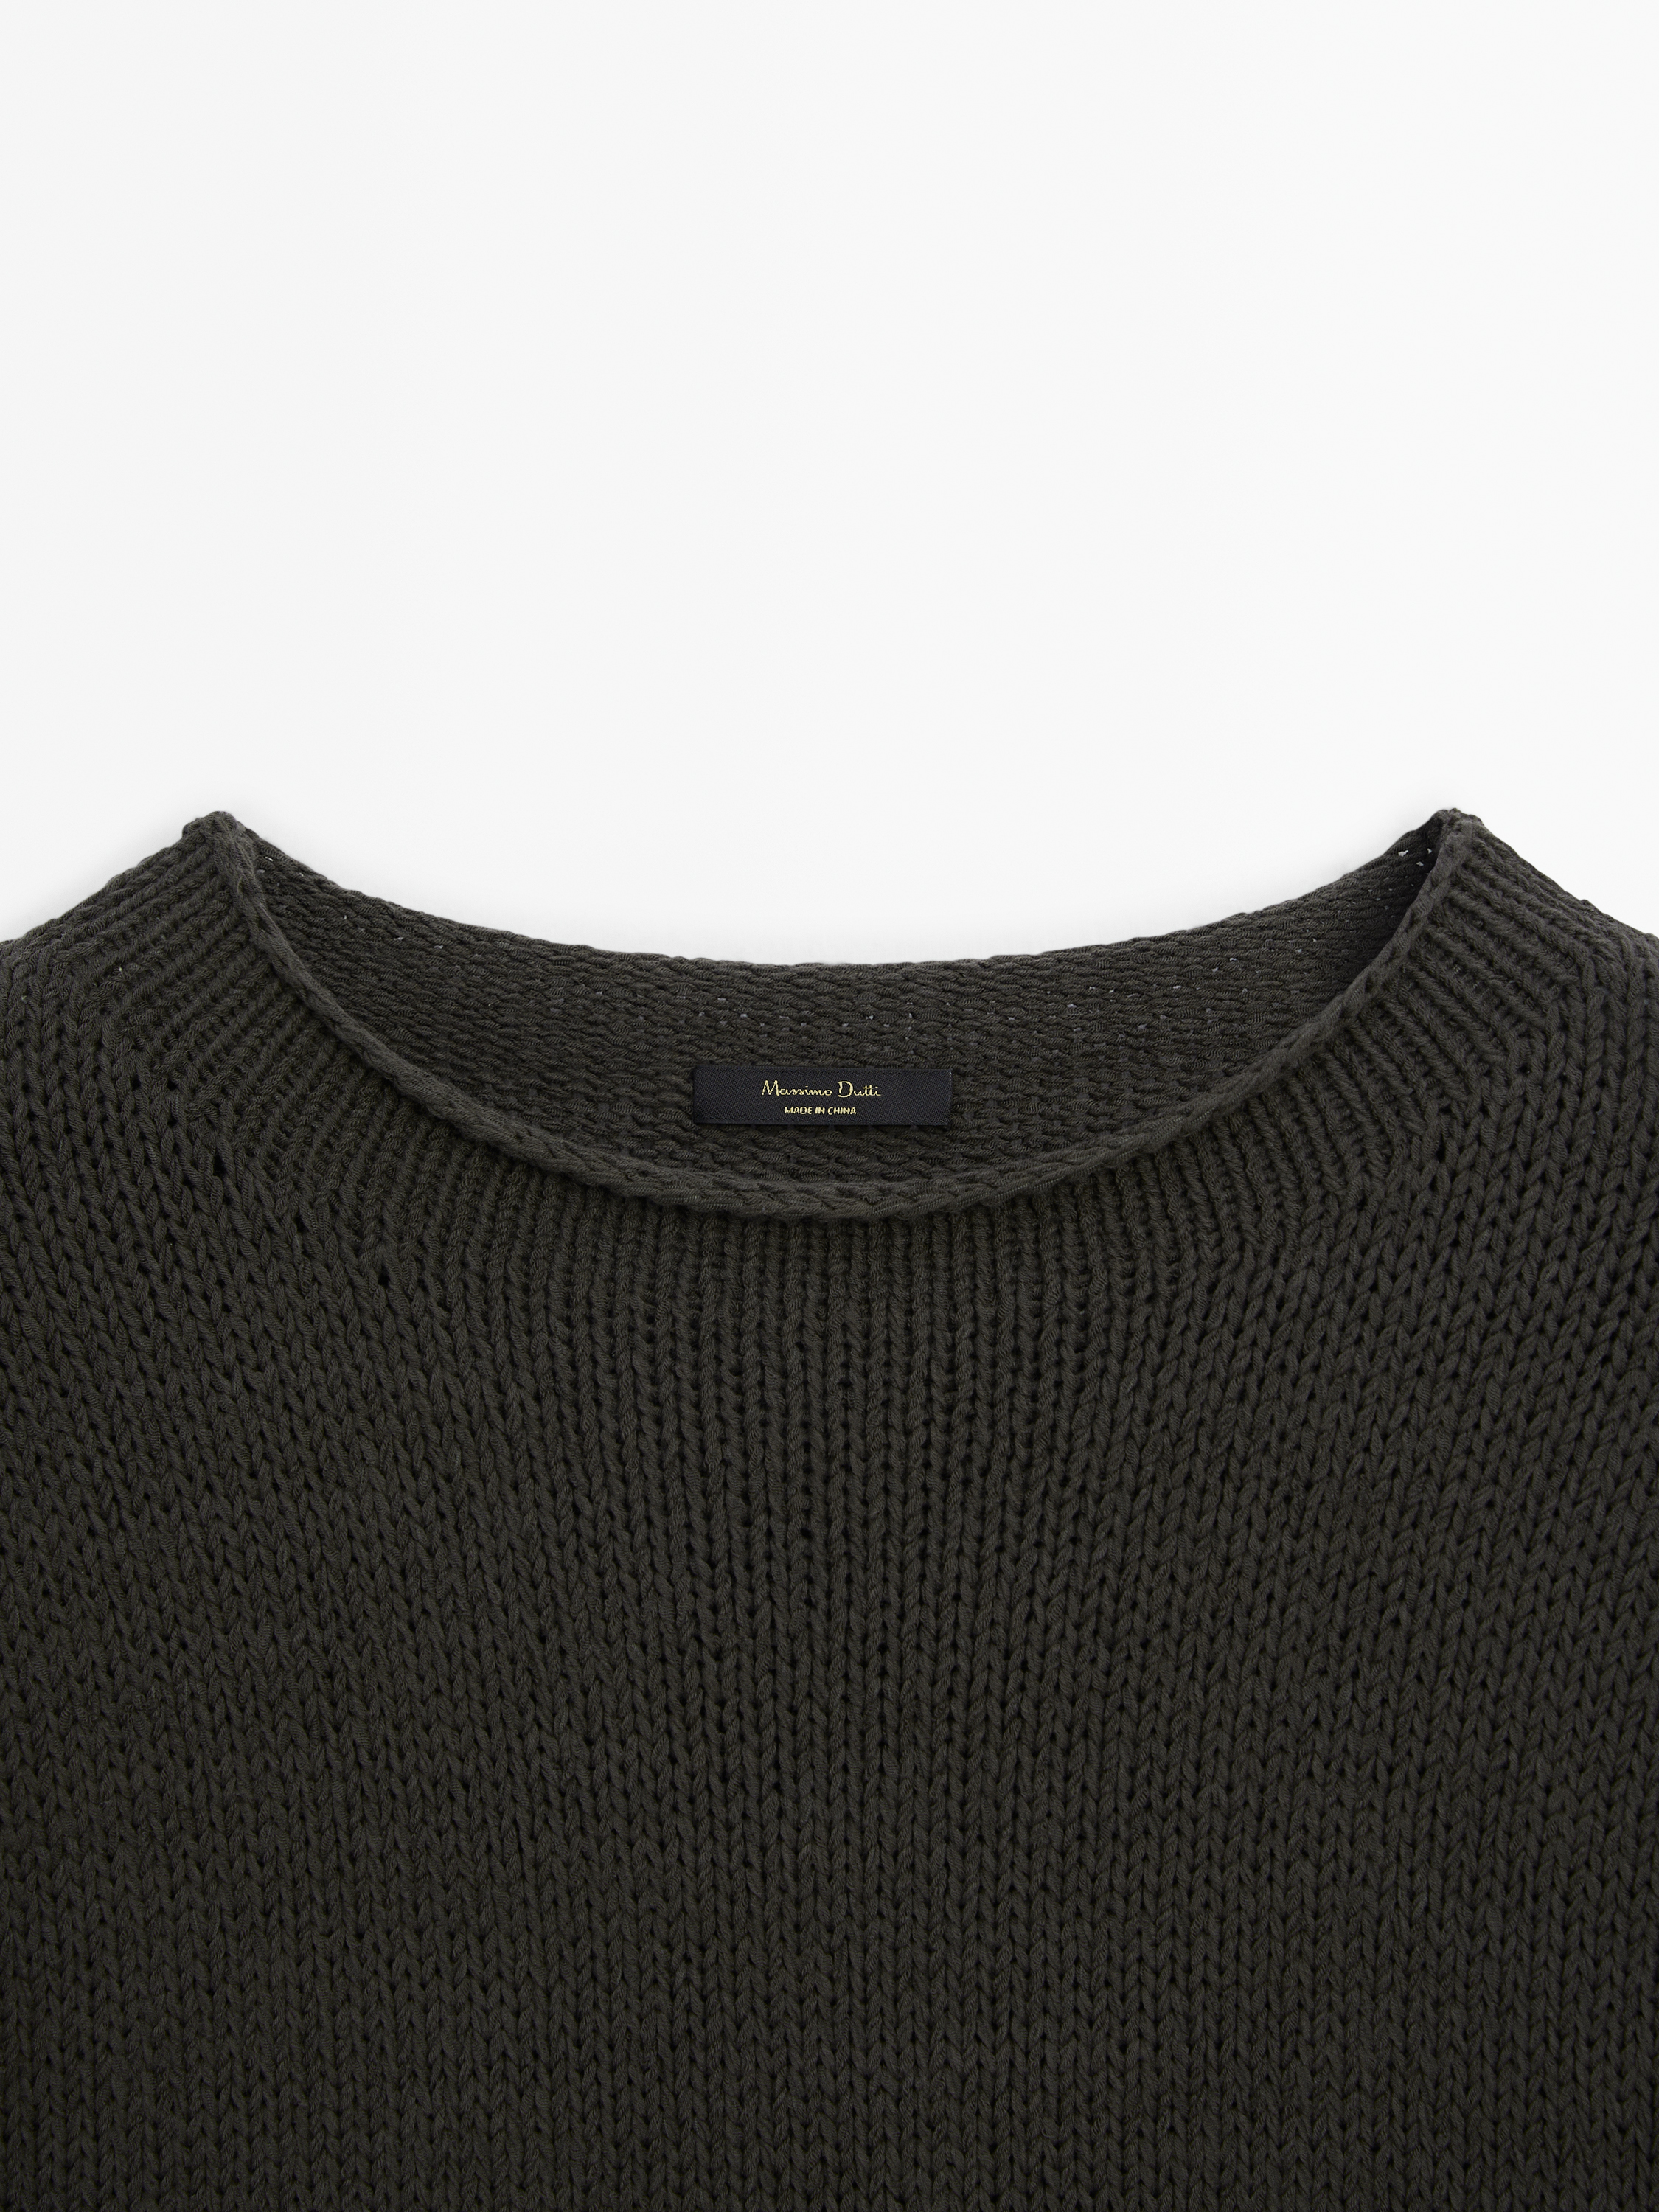 Cotton blend knit sweater crew neck